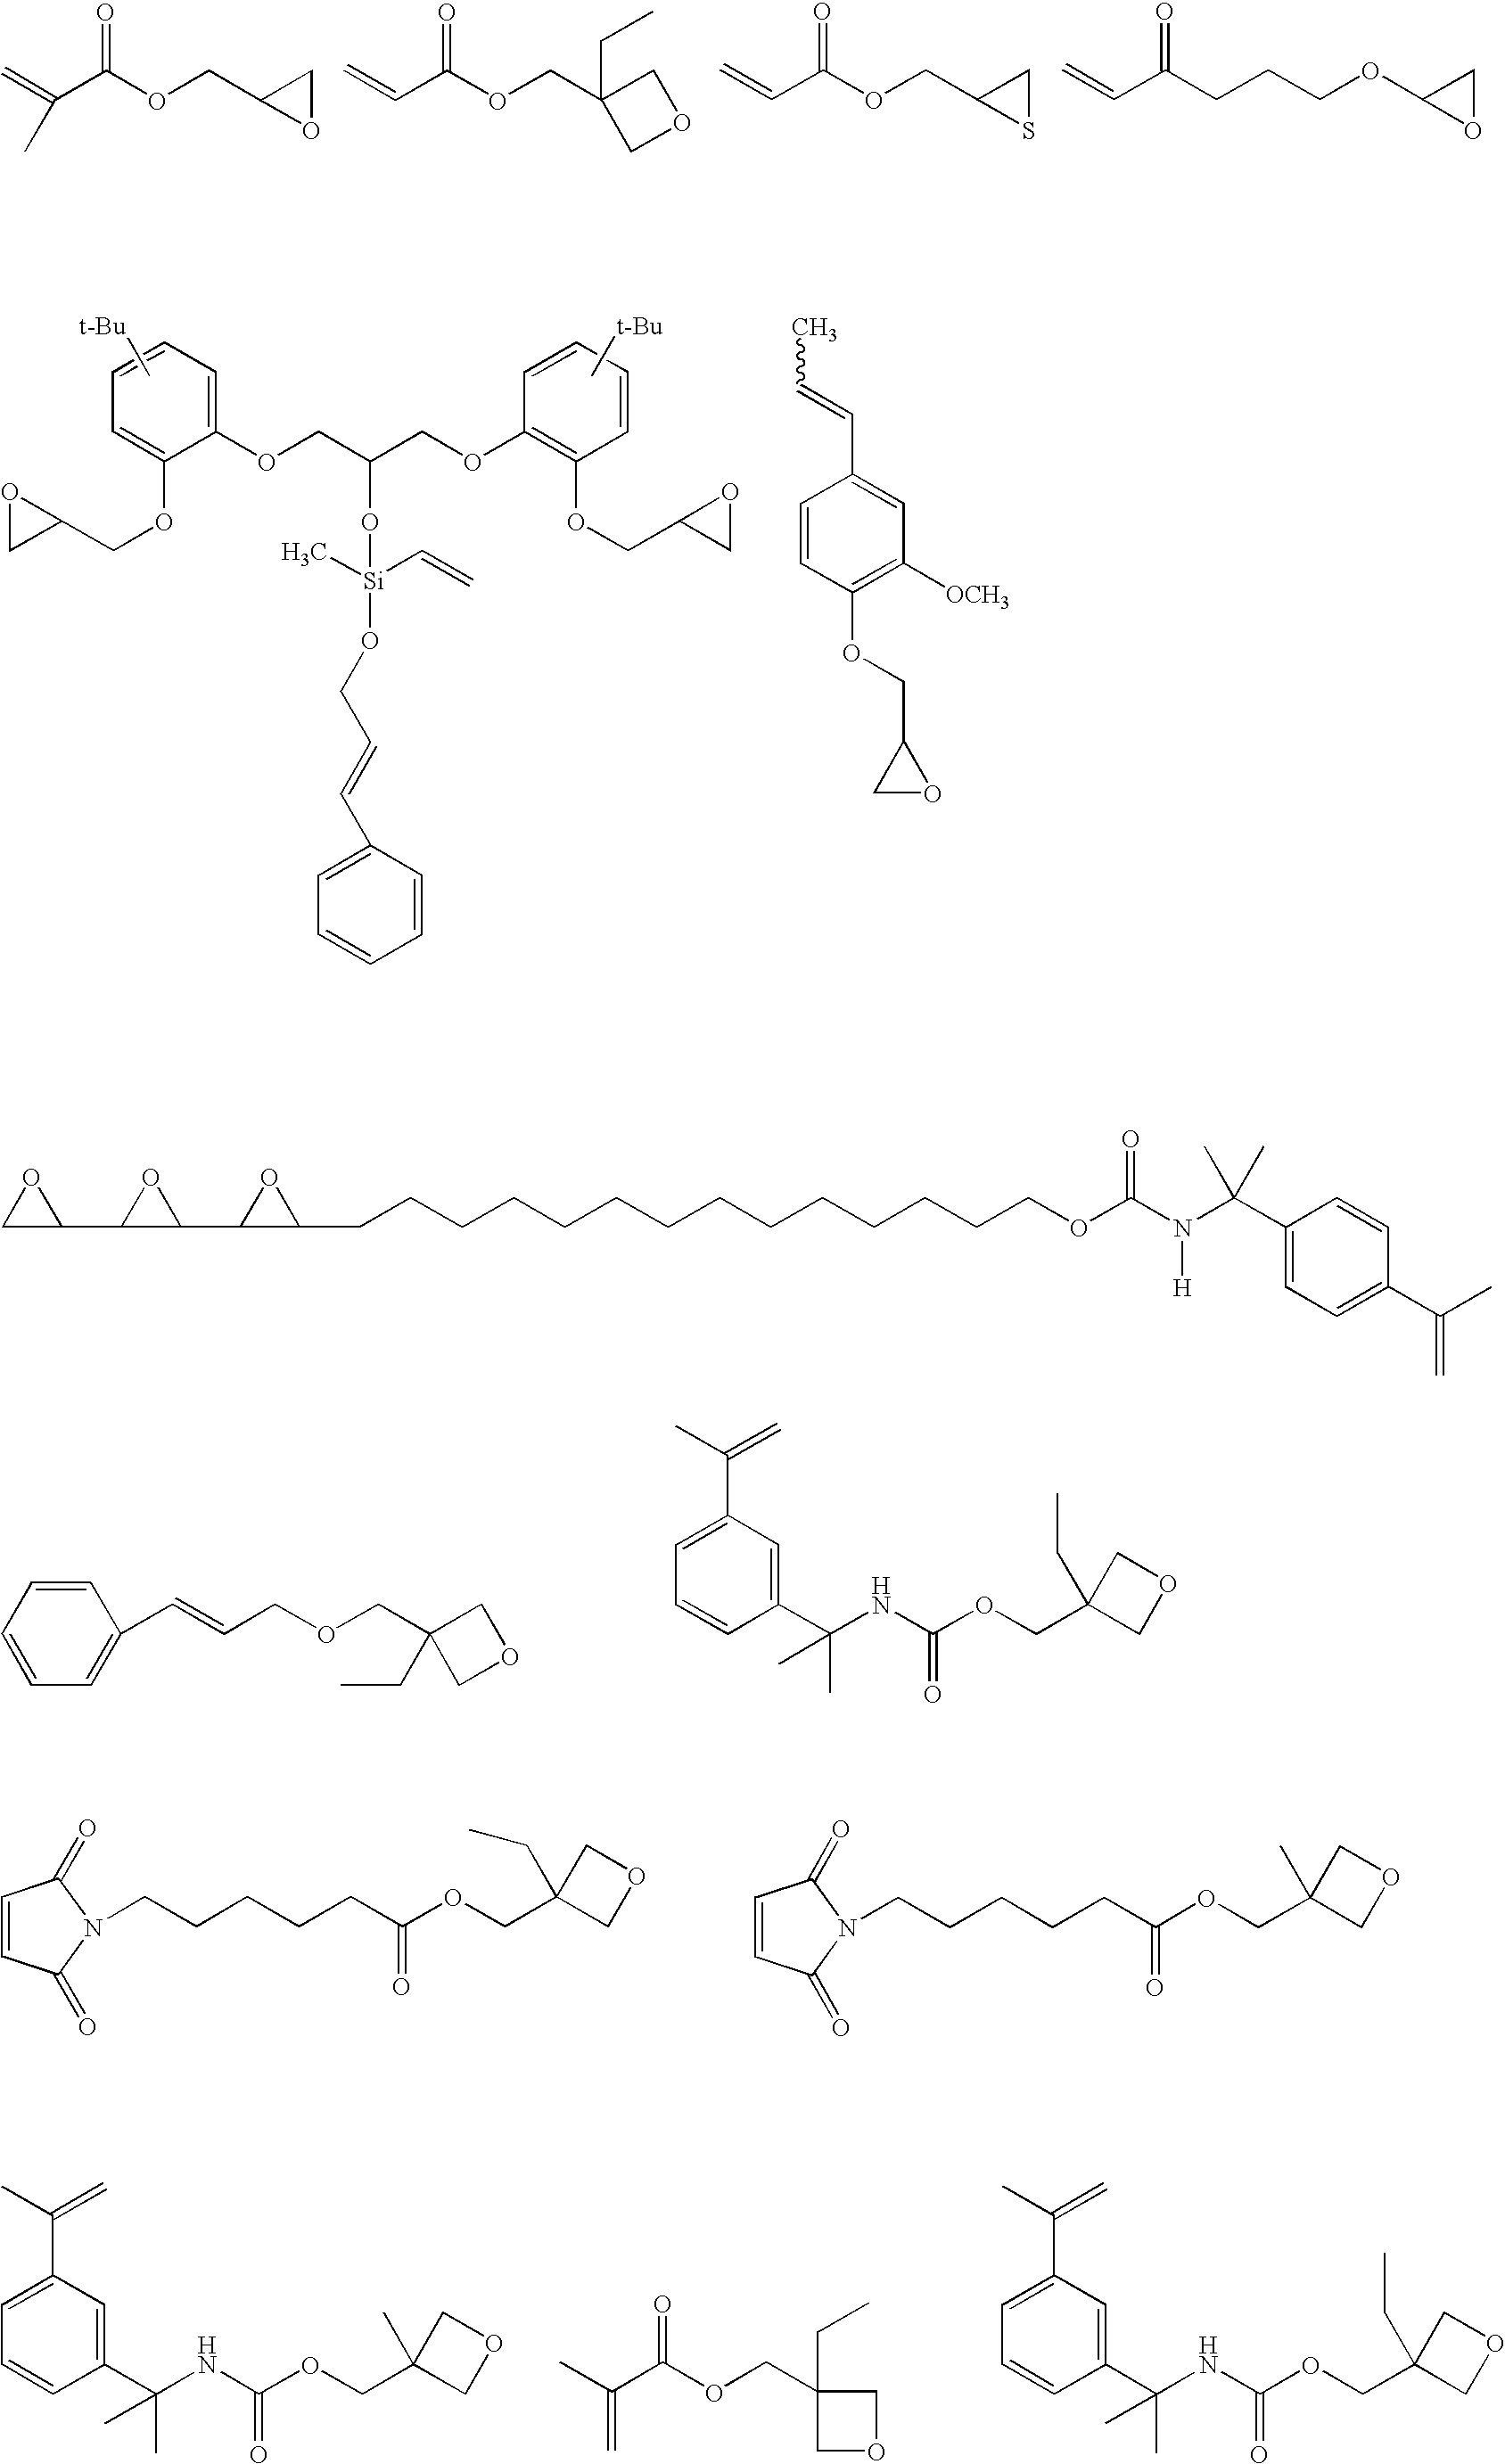 Curable materials containing siloxane